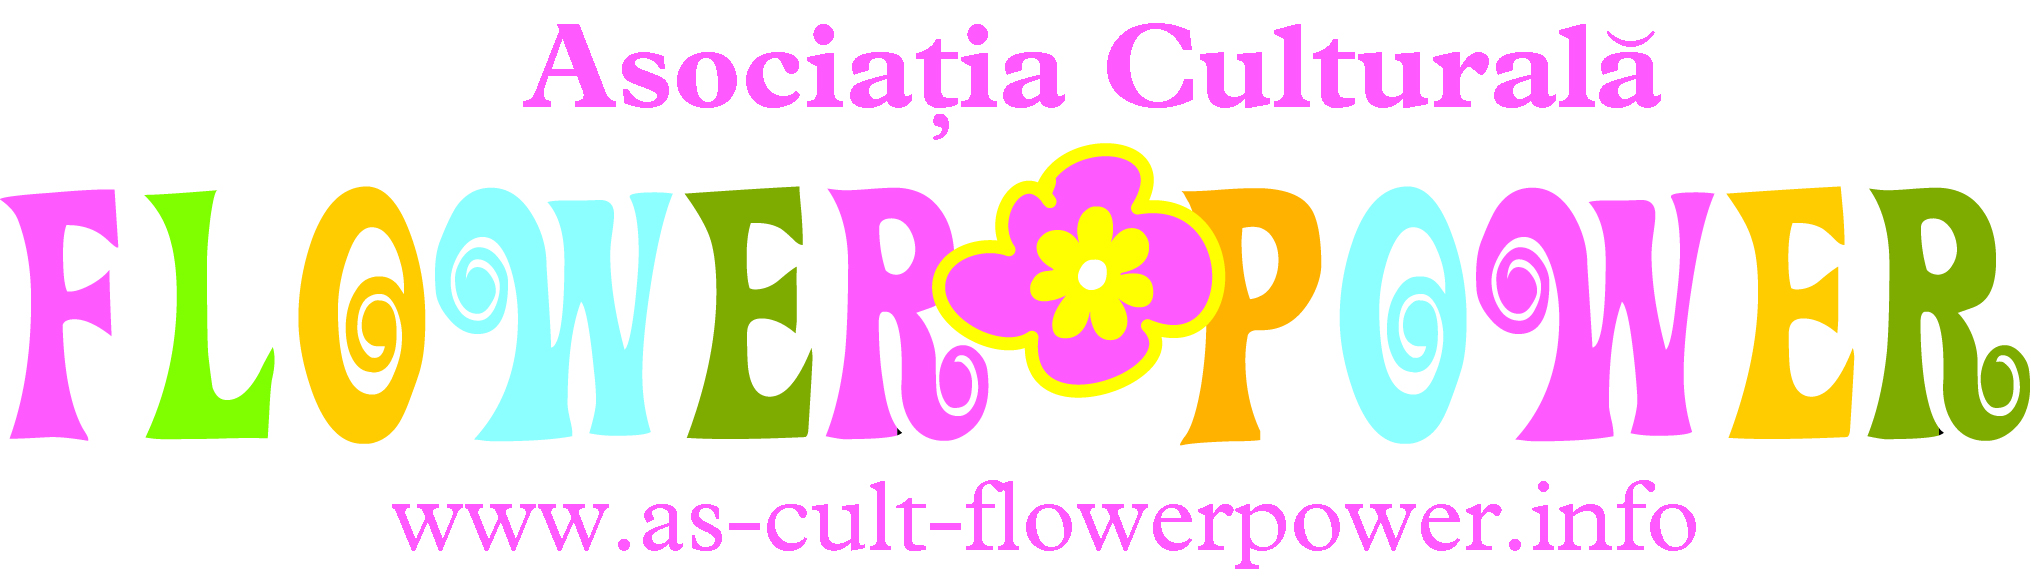 Asociatia Culturala Flower Power logo